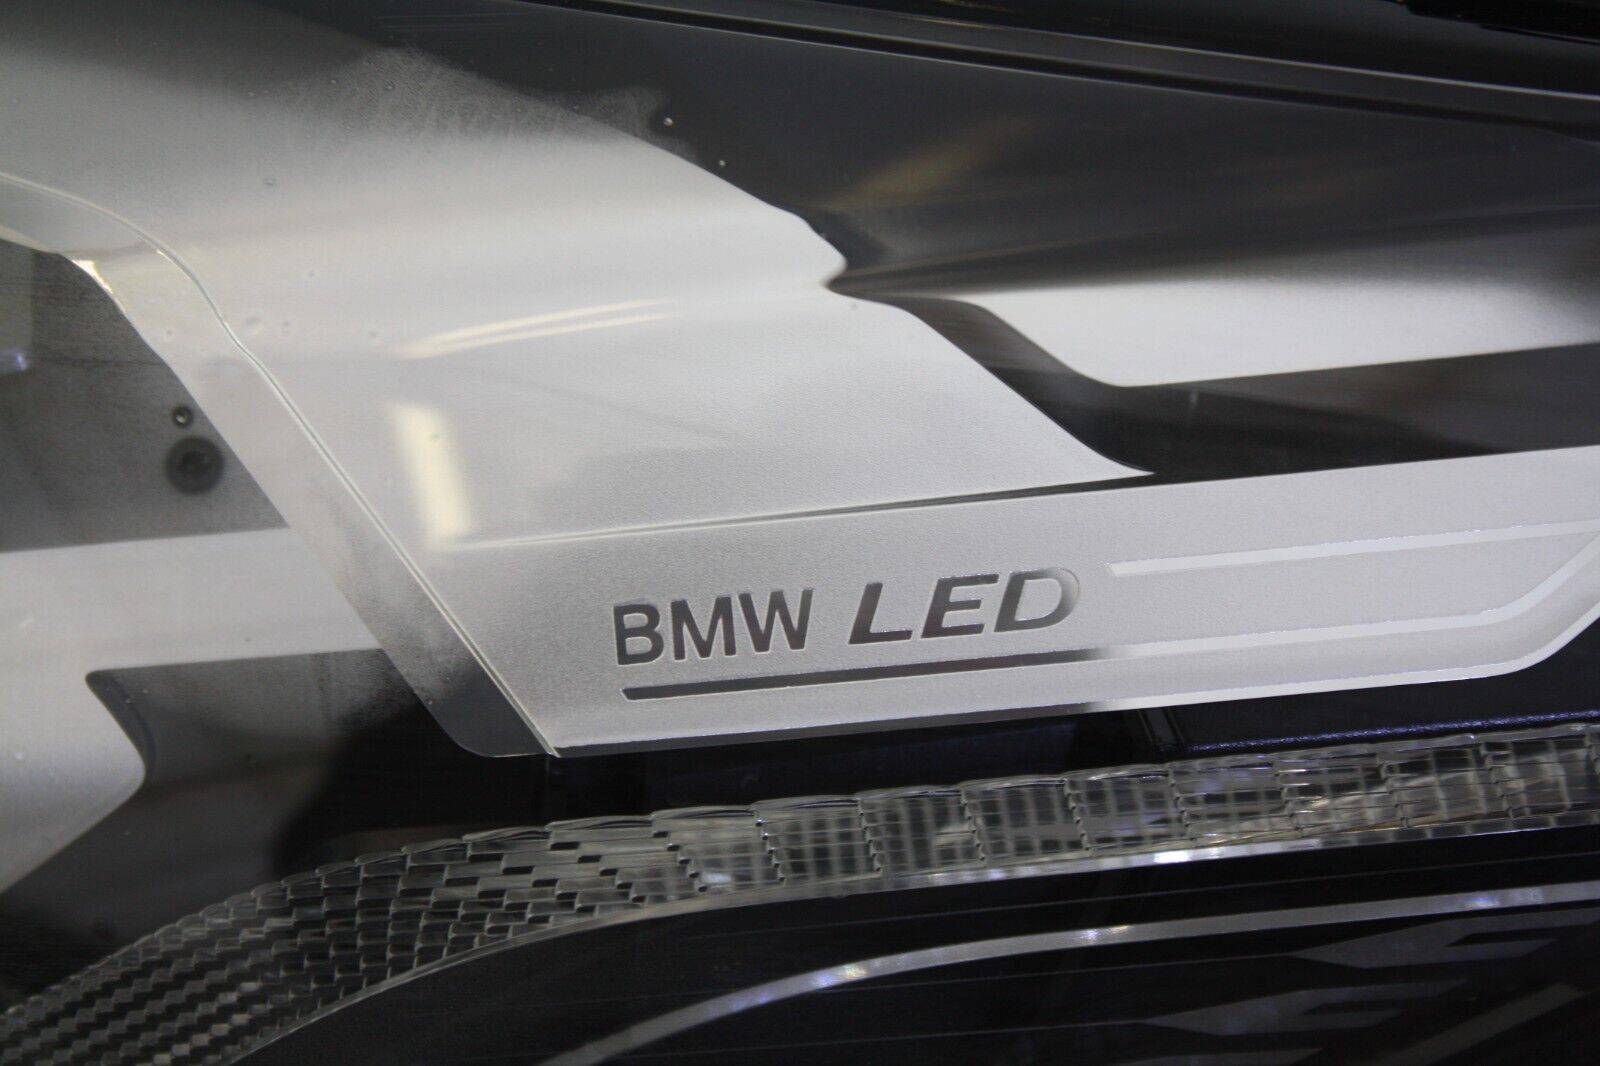 BMW-2-Series-U06-Active-Tourer-Left-LED-Headlight-5A42251-05-LENS-CRACKED-176106219707-2